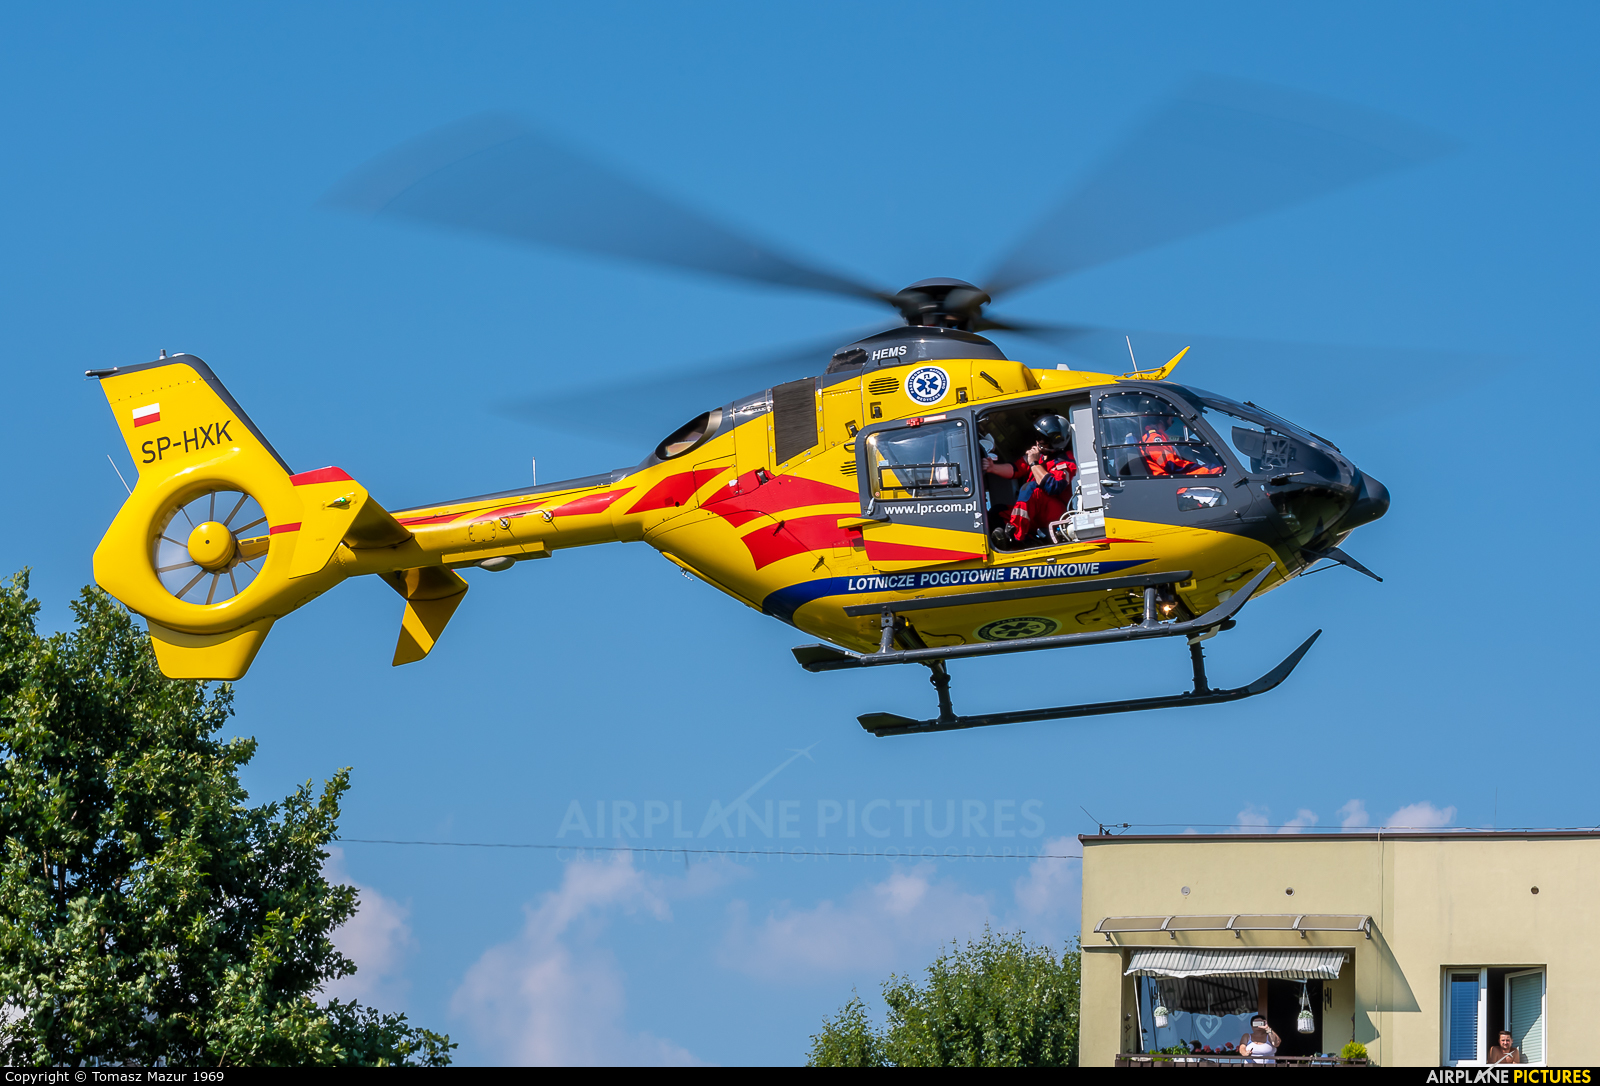 Polish Medical Air Rescue - Lotnicze Pogotowie Ratunkowe SP-HXK aircraft at Off Airport - Poland